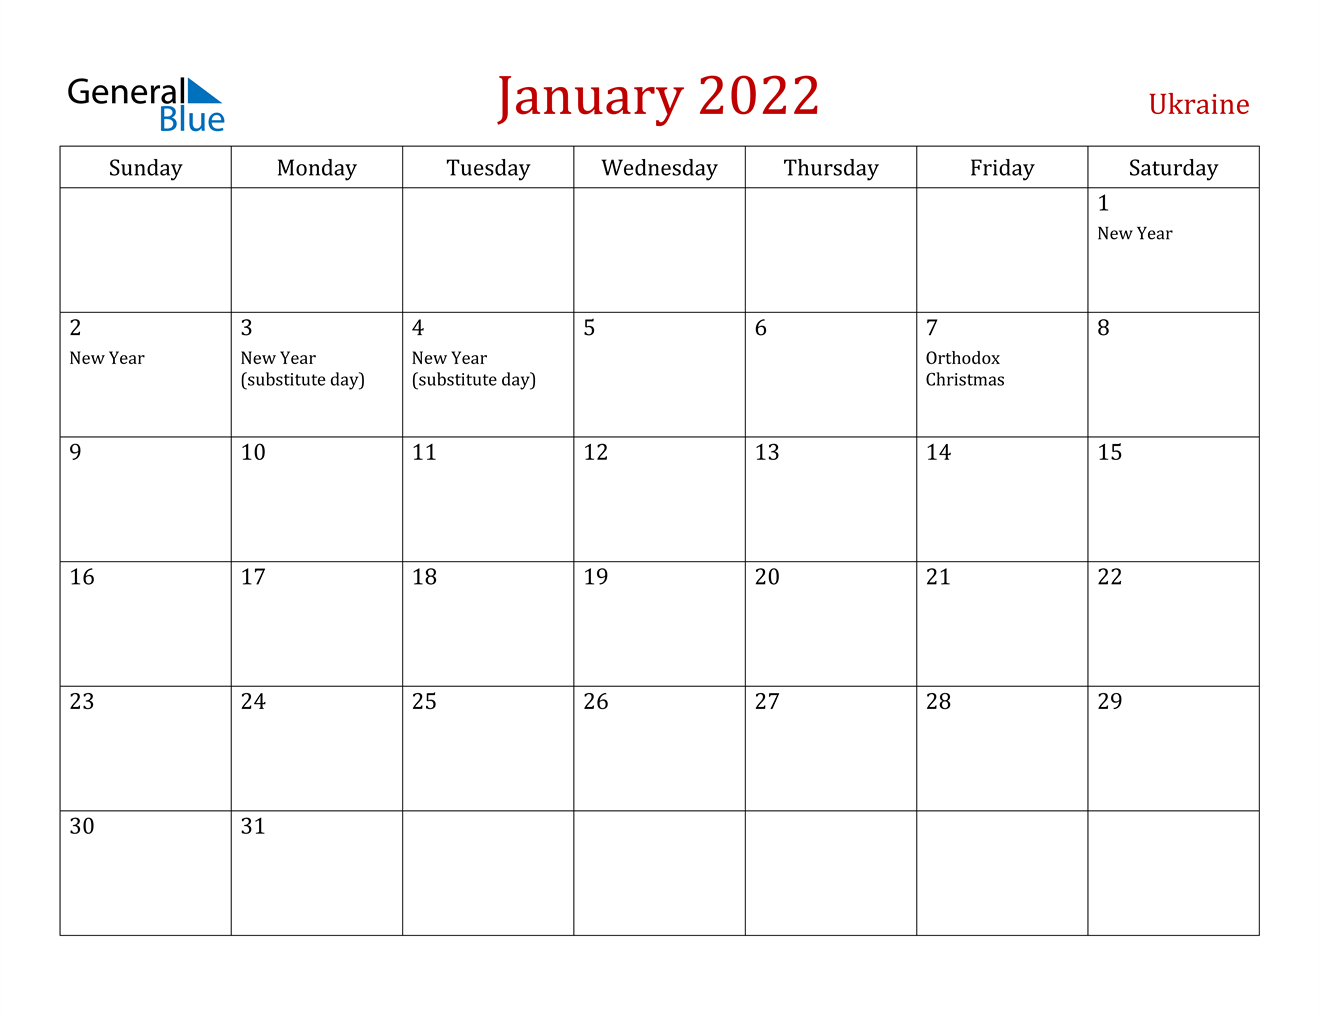 January 2022 Calendar - Ukraine